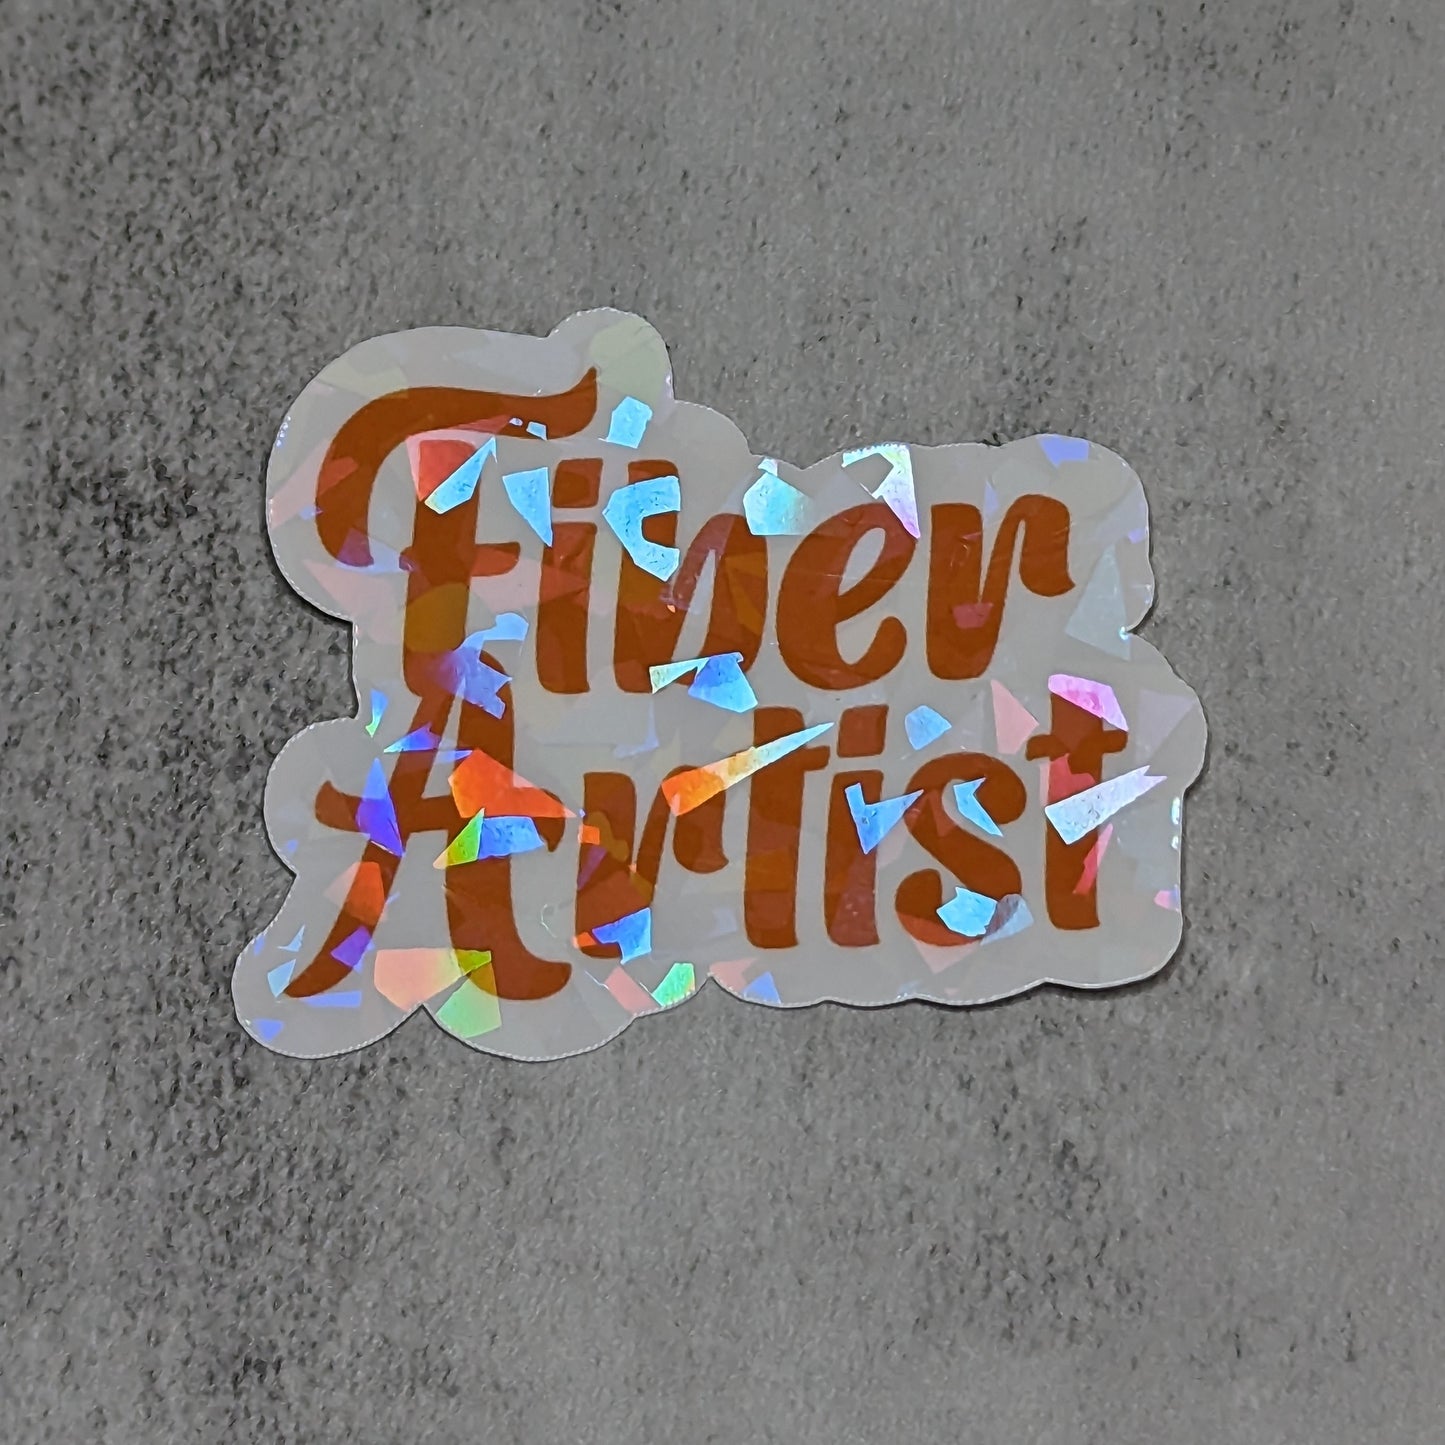 Fiber Artist Die-Cut Sticker Decal